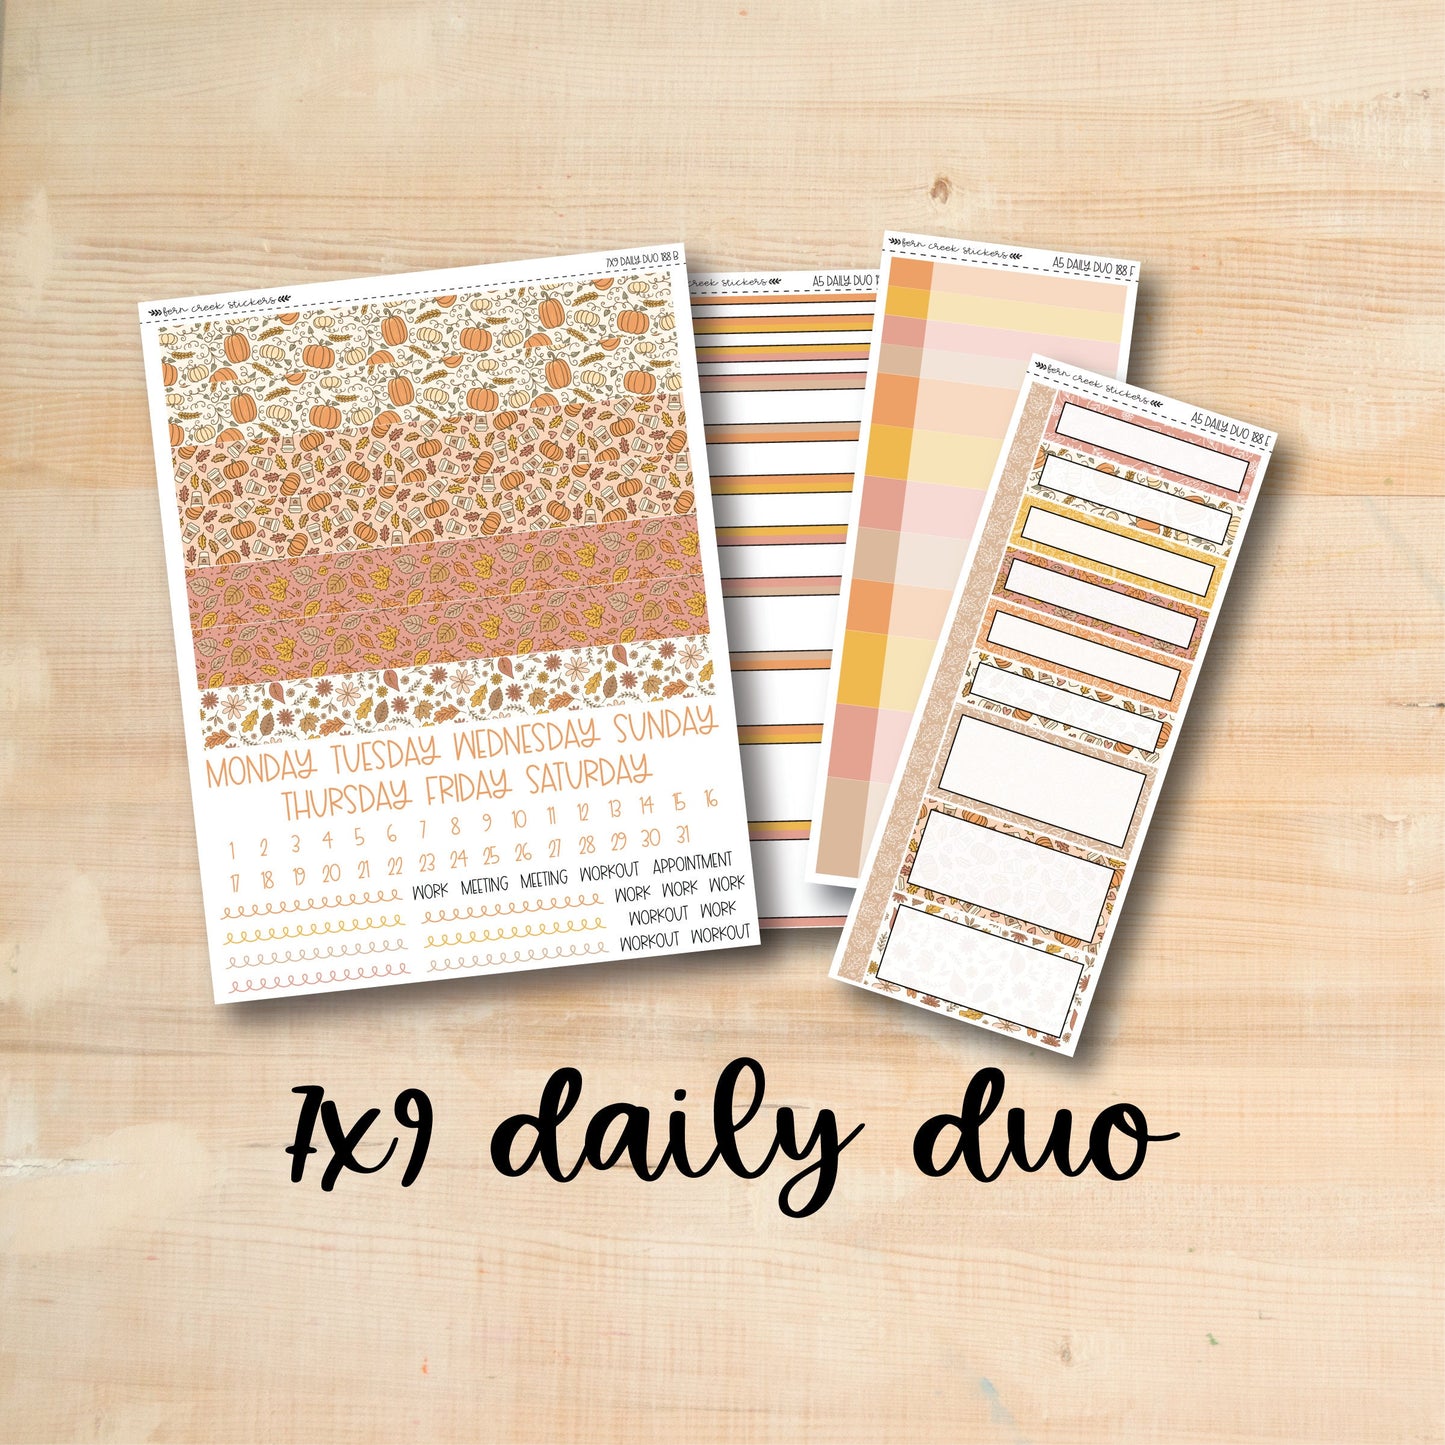 7x9 Daily Duo 188 || PUMPKIN SPICE 7x9 Daily Duo Kit